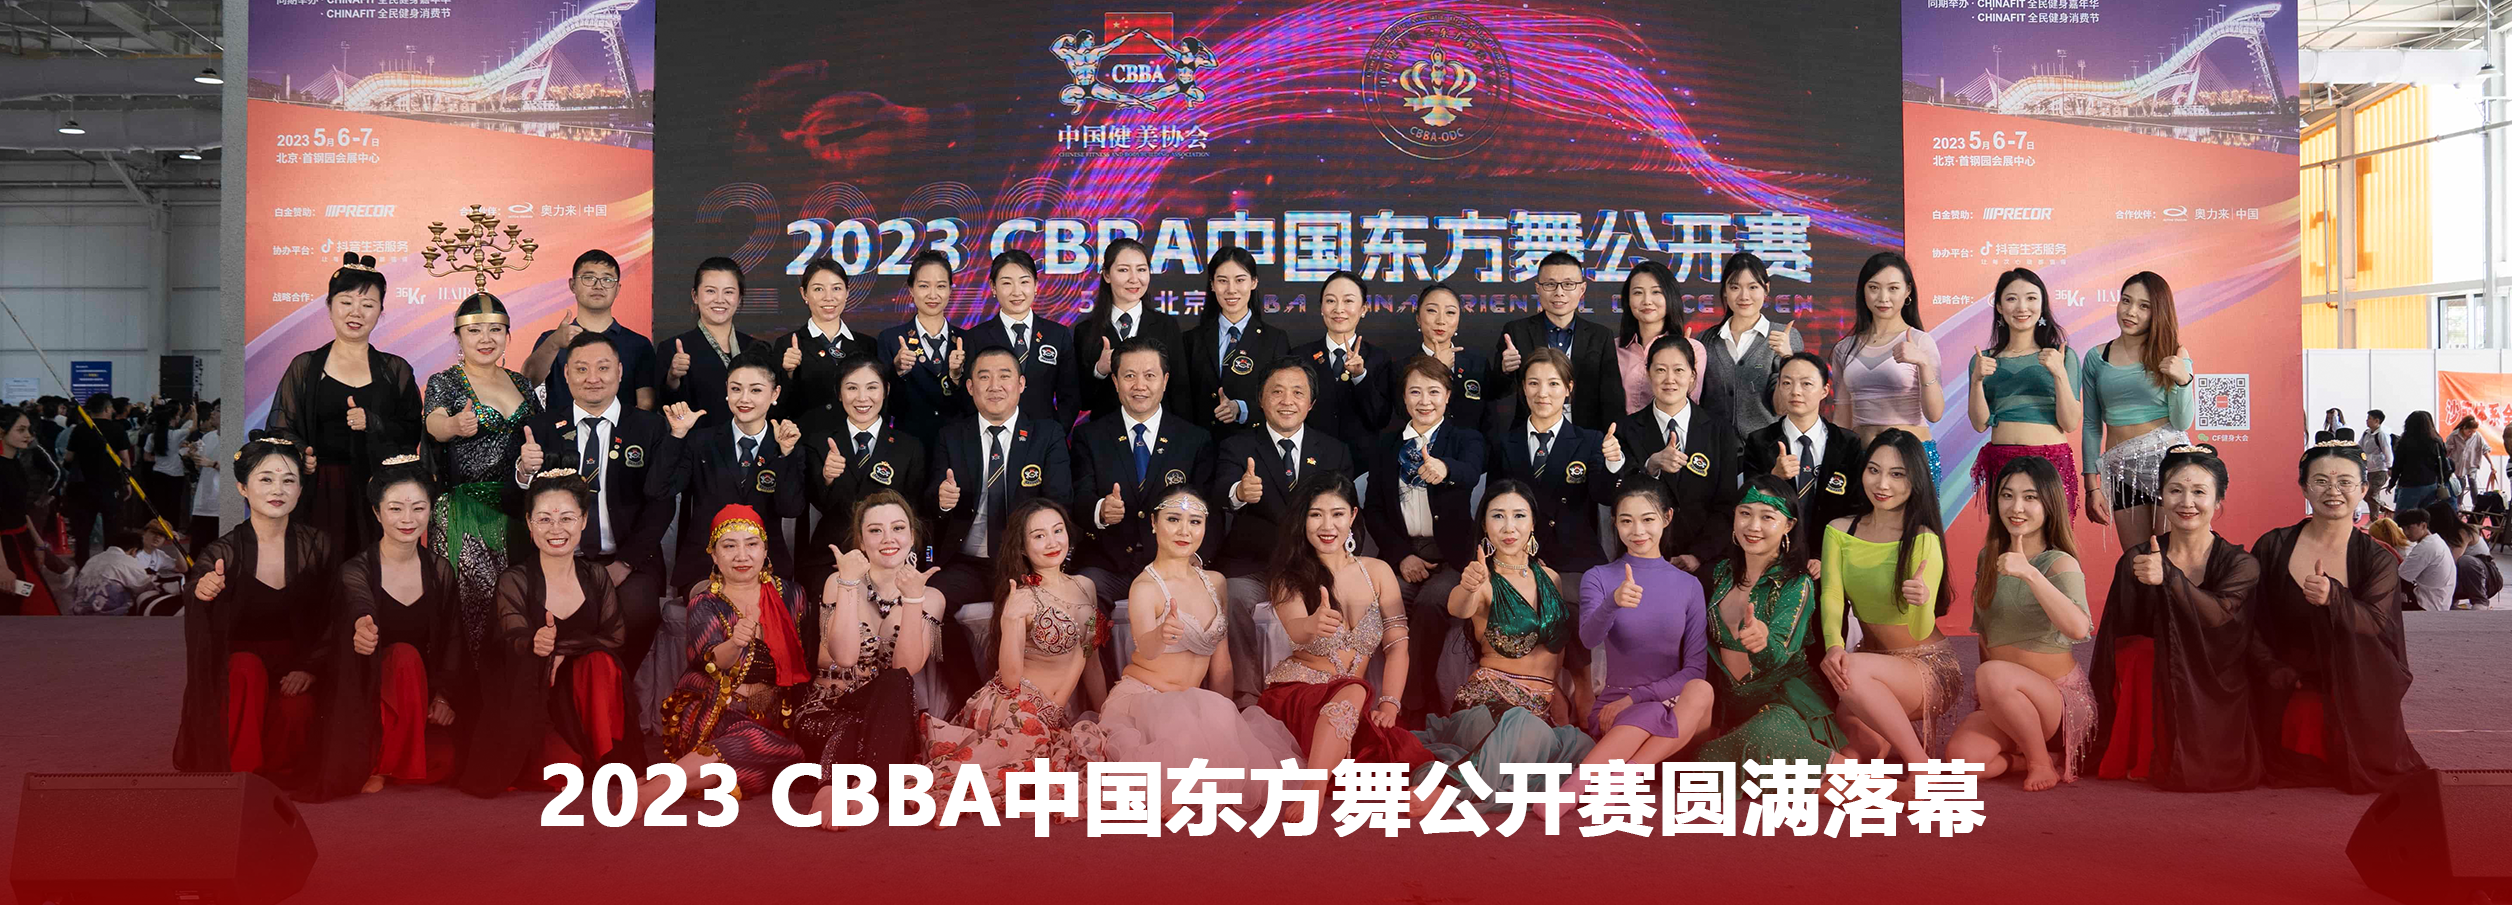 2023 CBBA中国东方舞公开赛圆满落幕